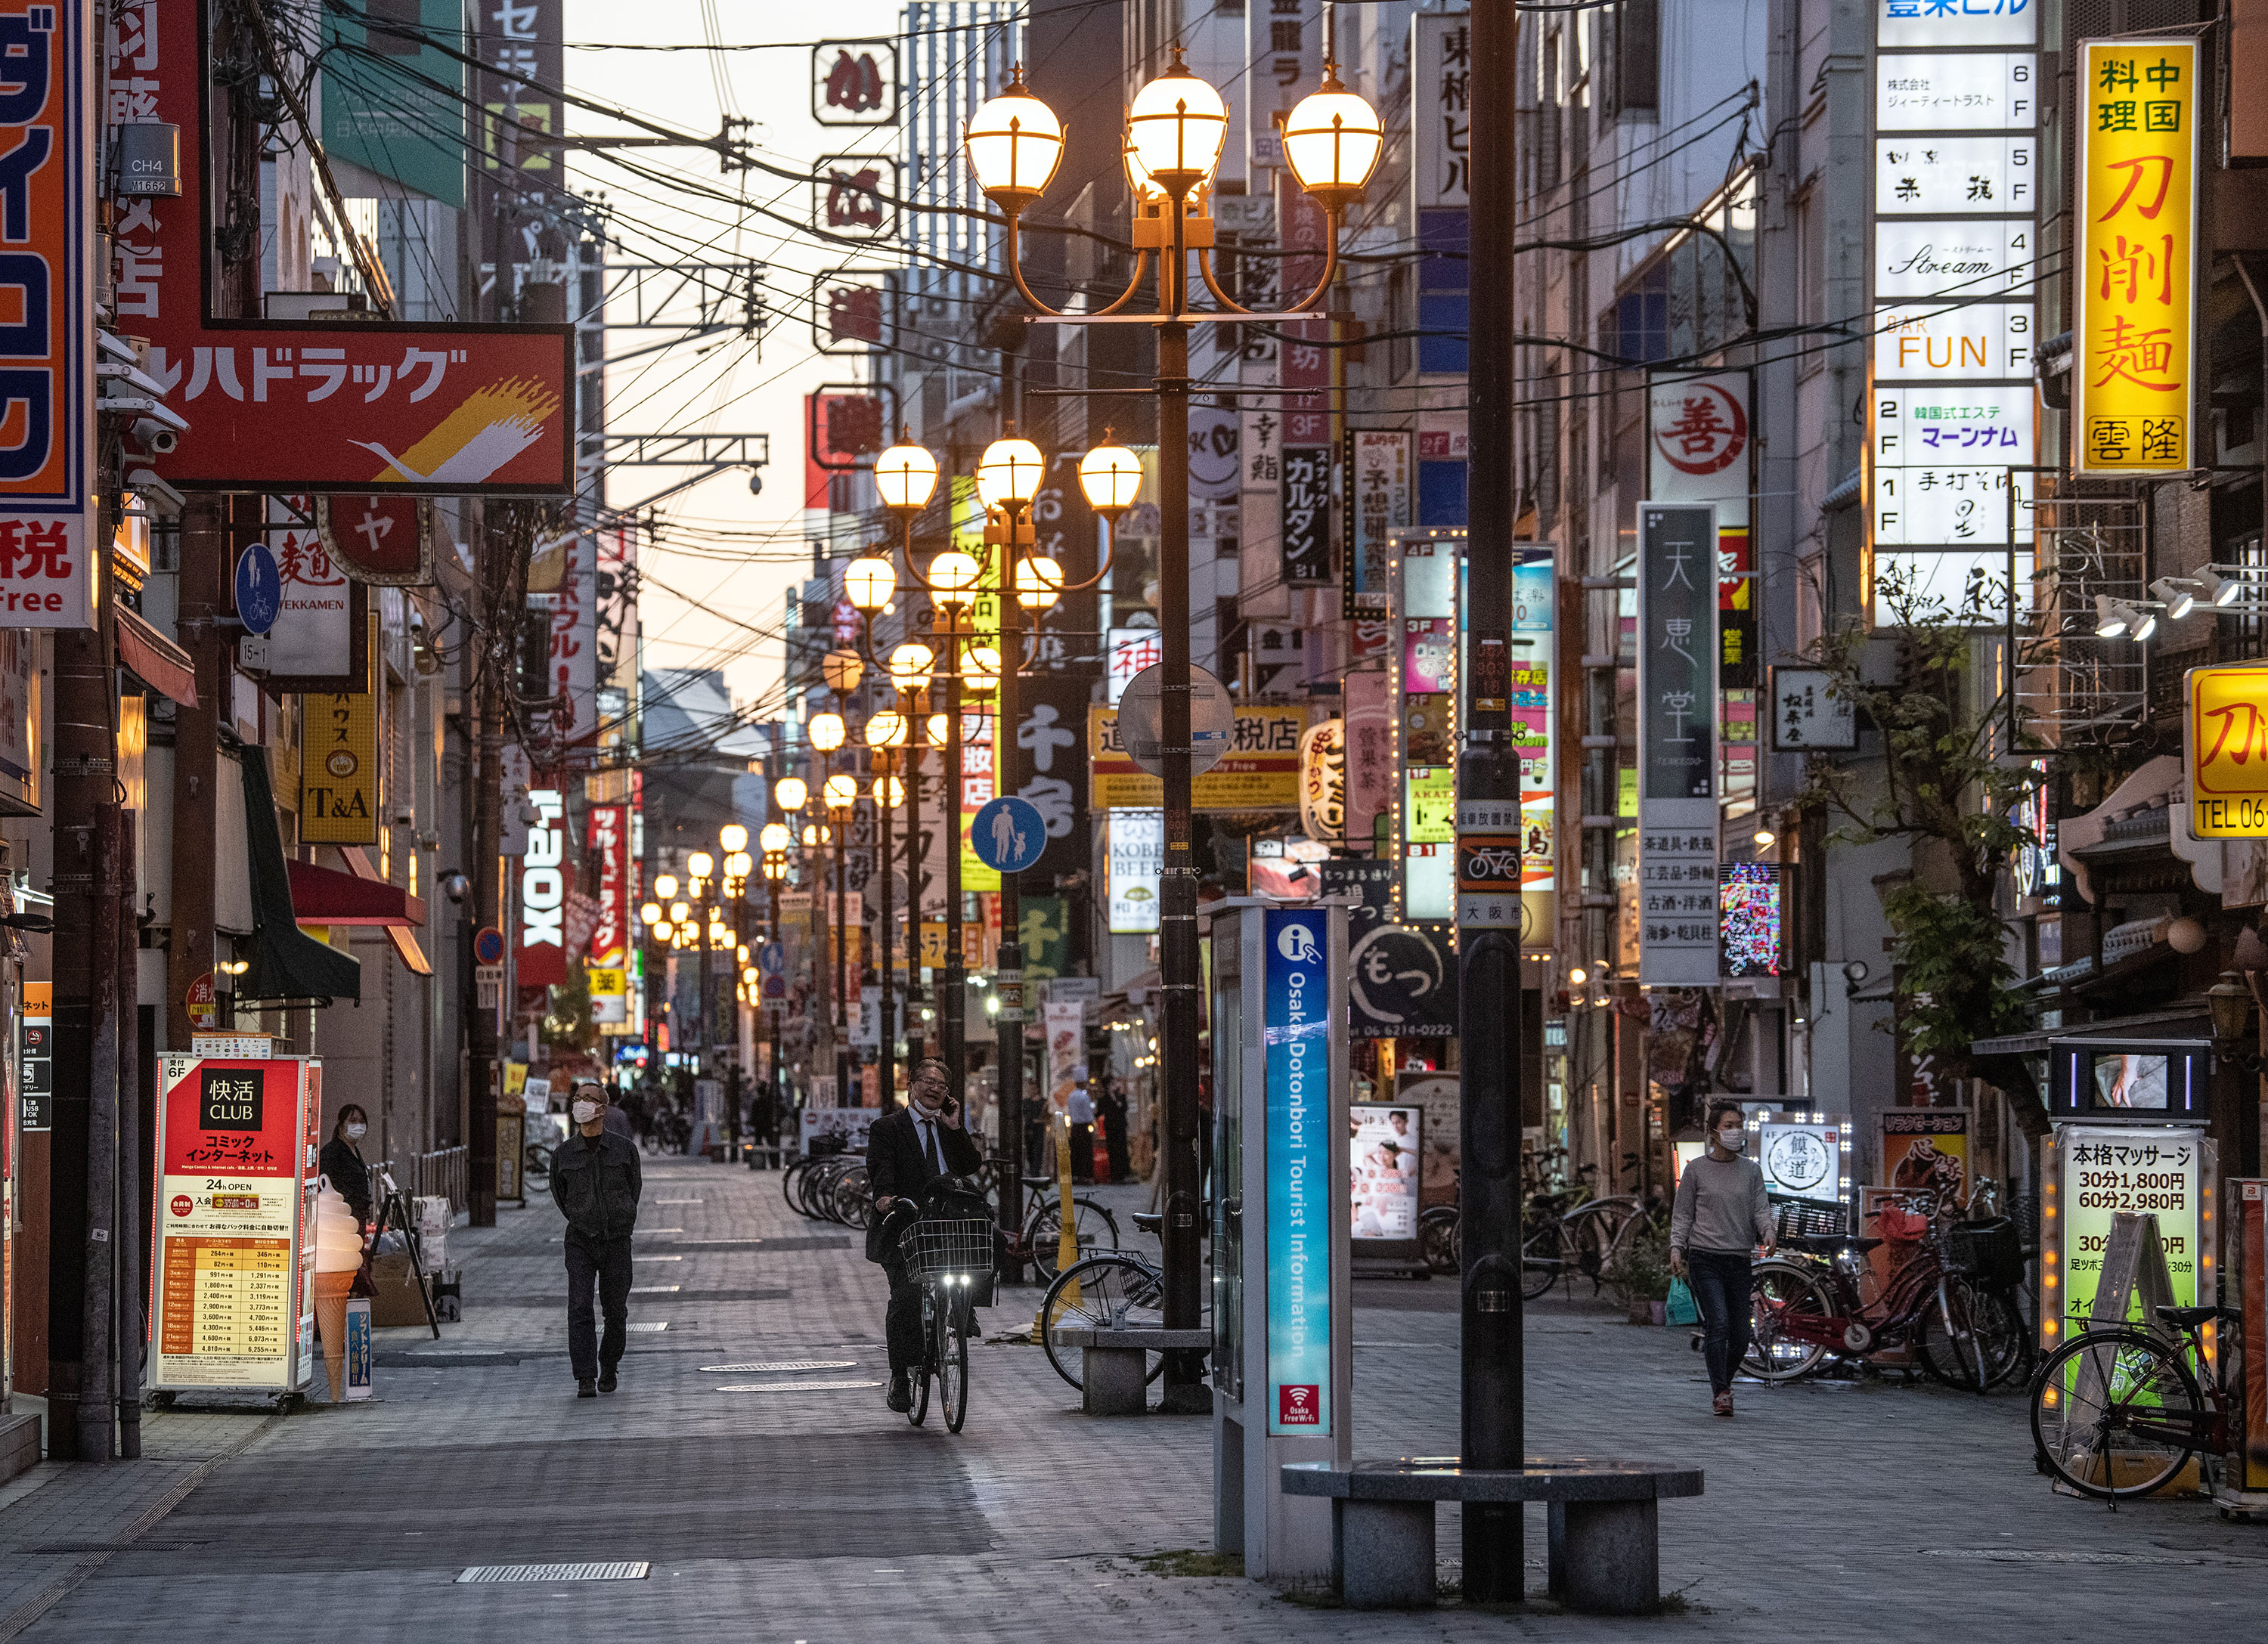 People walk around Dotonbori, one of Osaka's most popular tourist areas, on May 13 in Osaka, Japan.